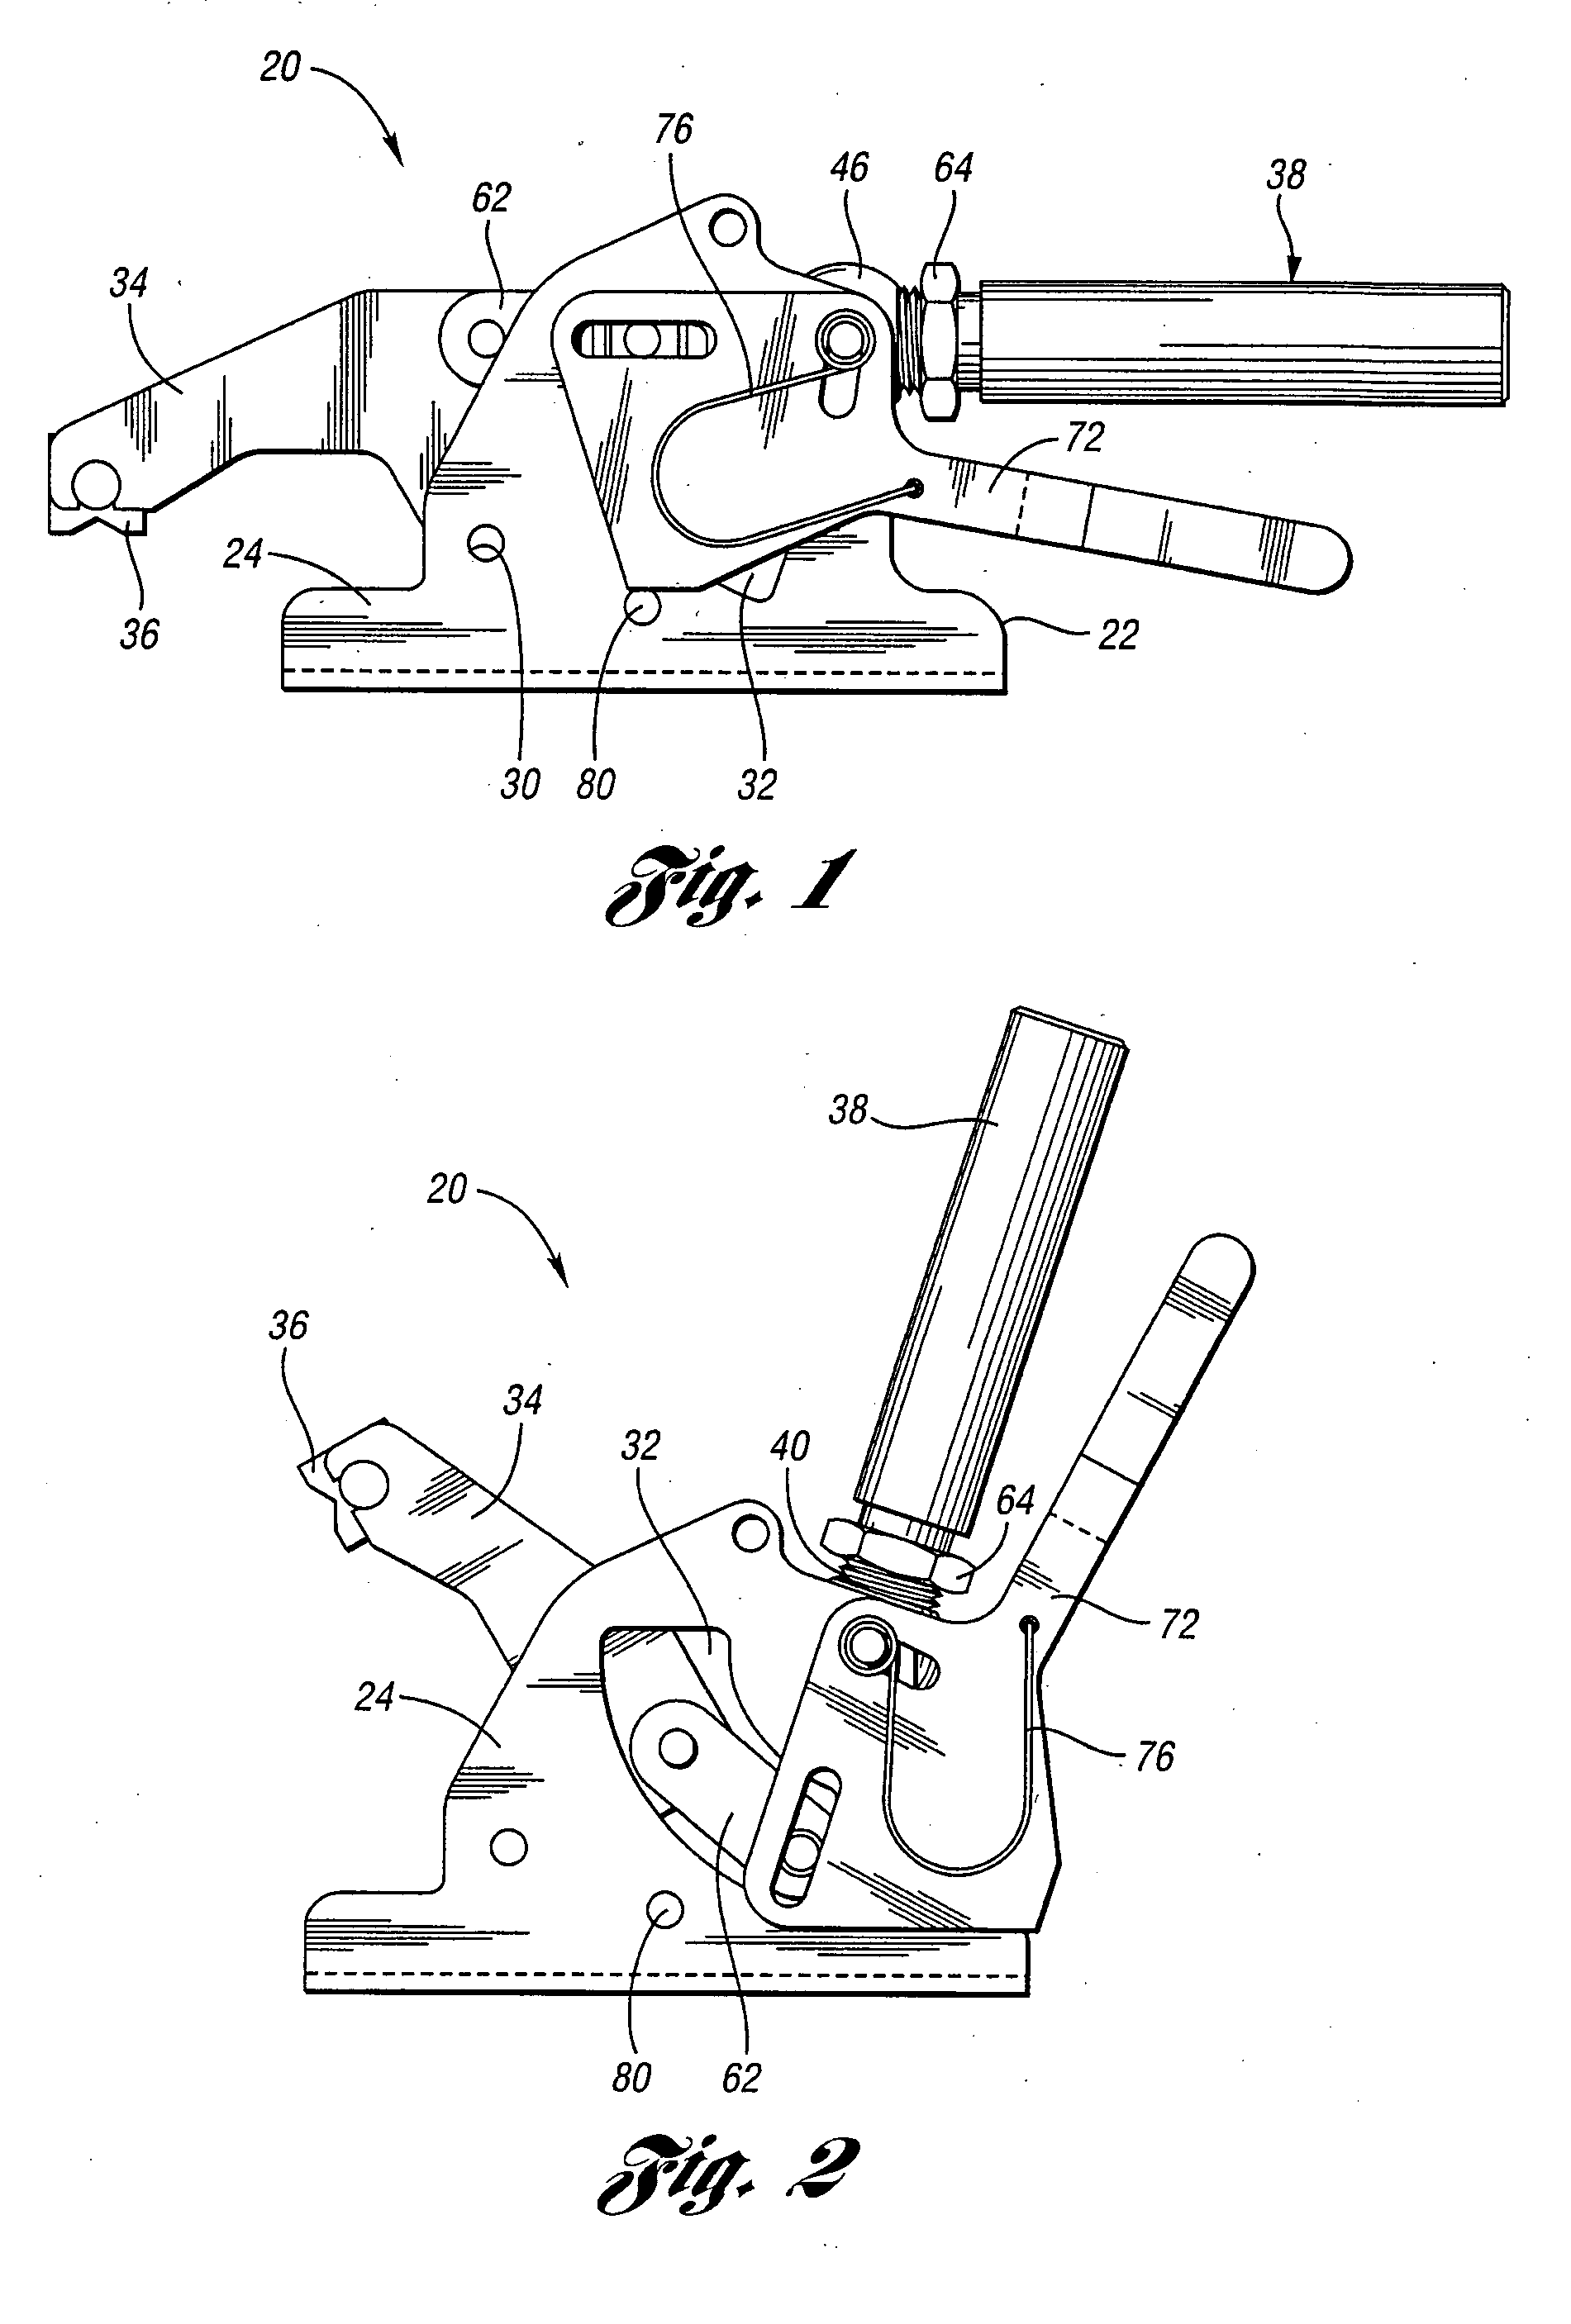 T-slot clamp